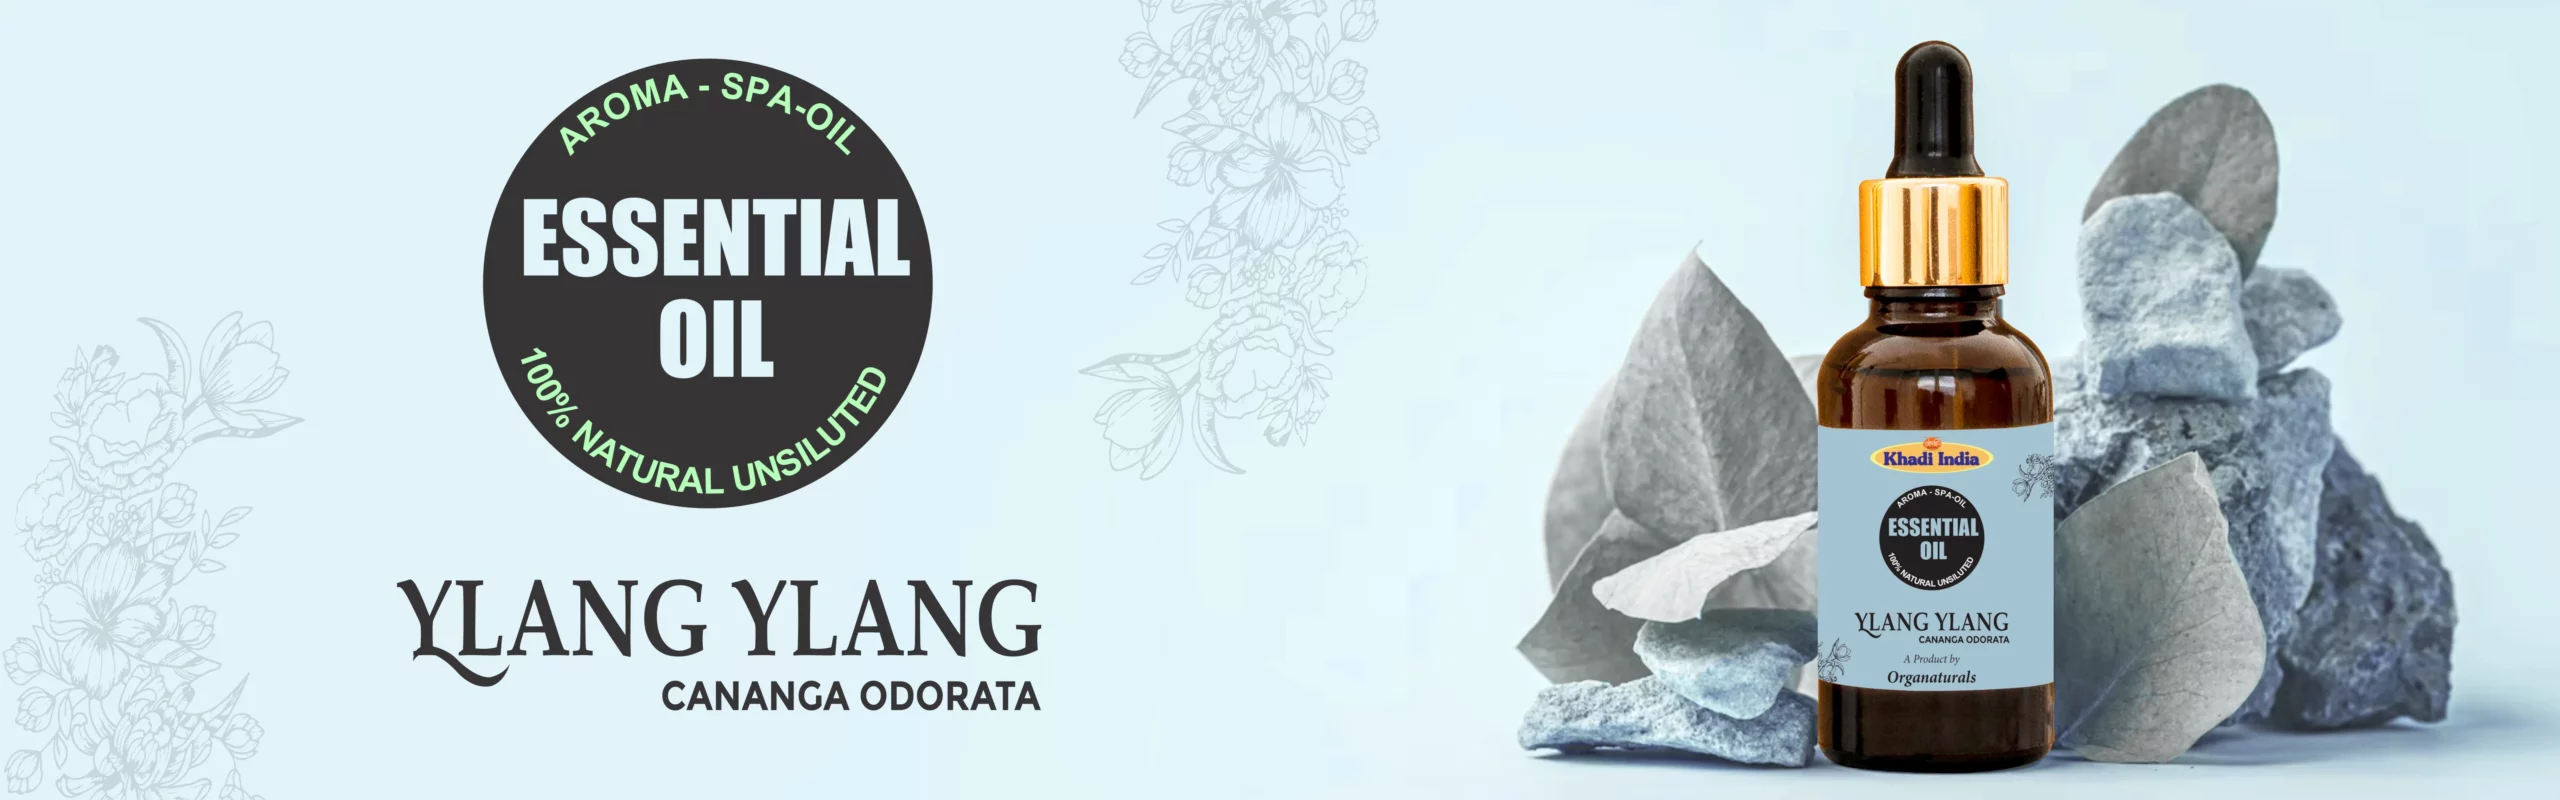 Ylang Ylang Essential Oil - www.dkihenna.com